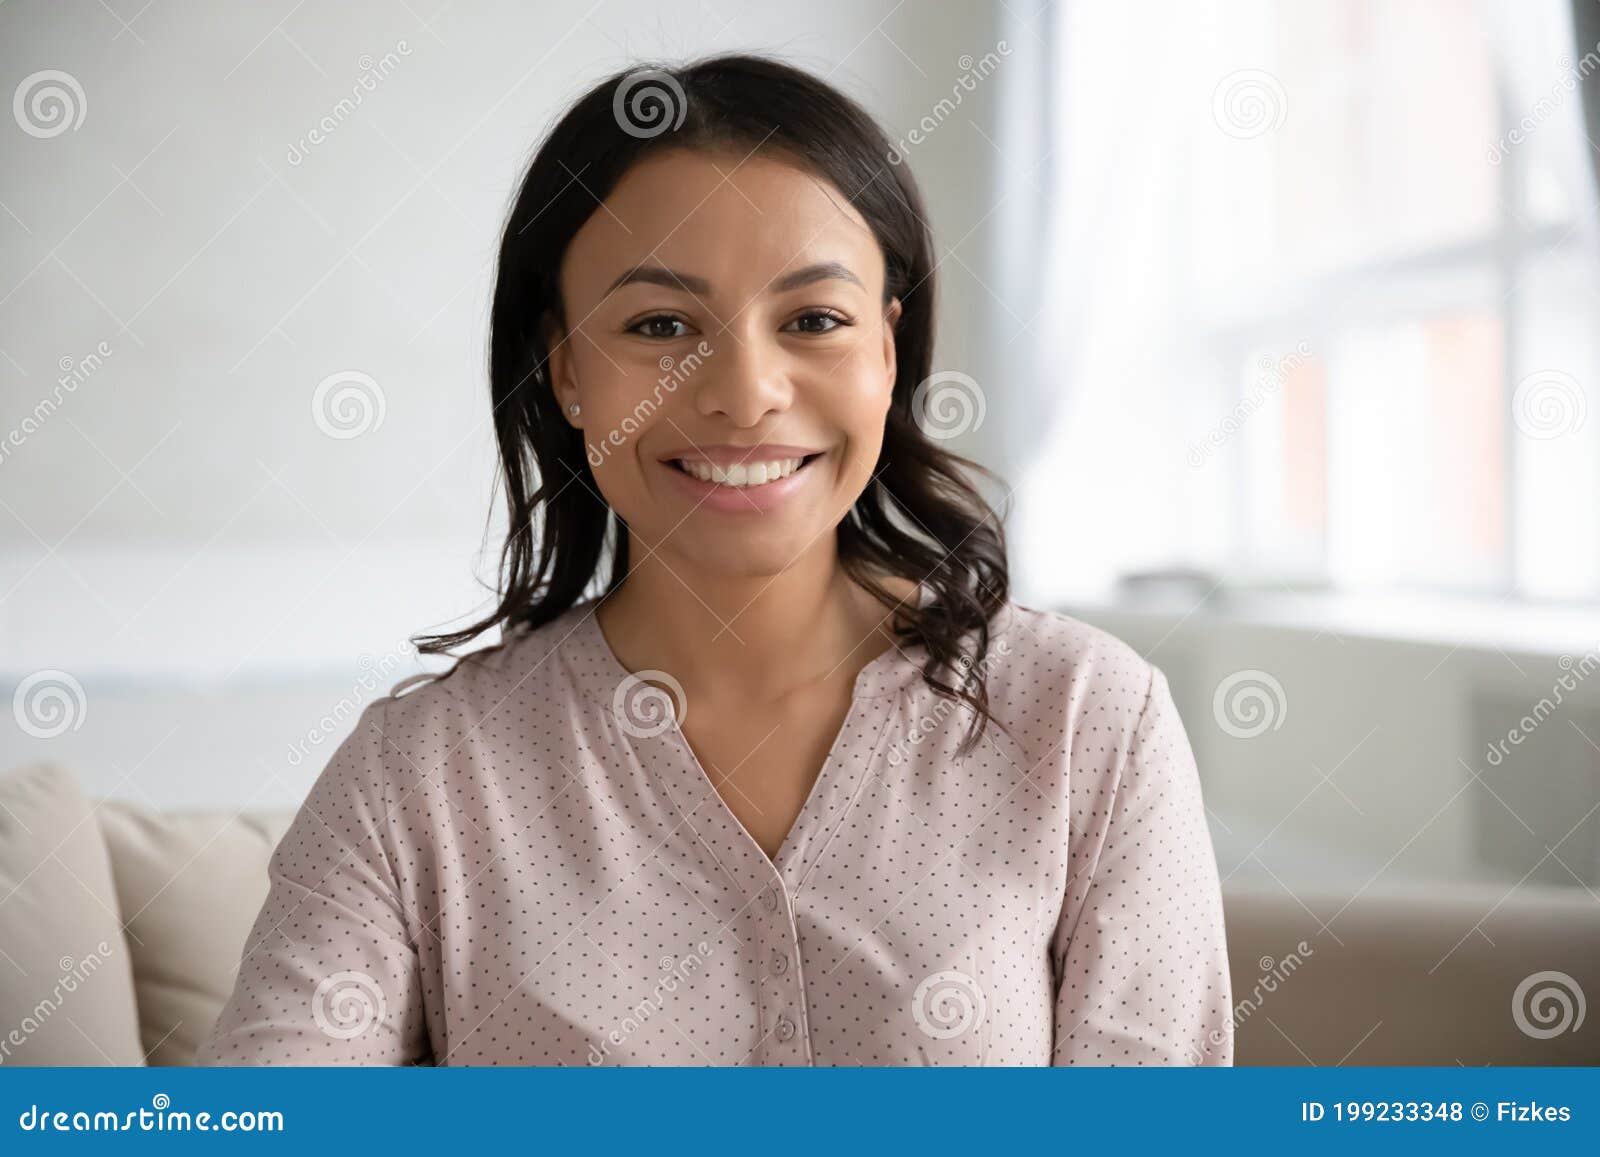 headshot portrait of smiling biracial woman posing at home